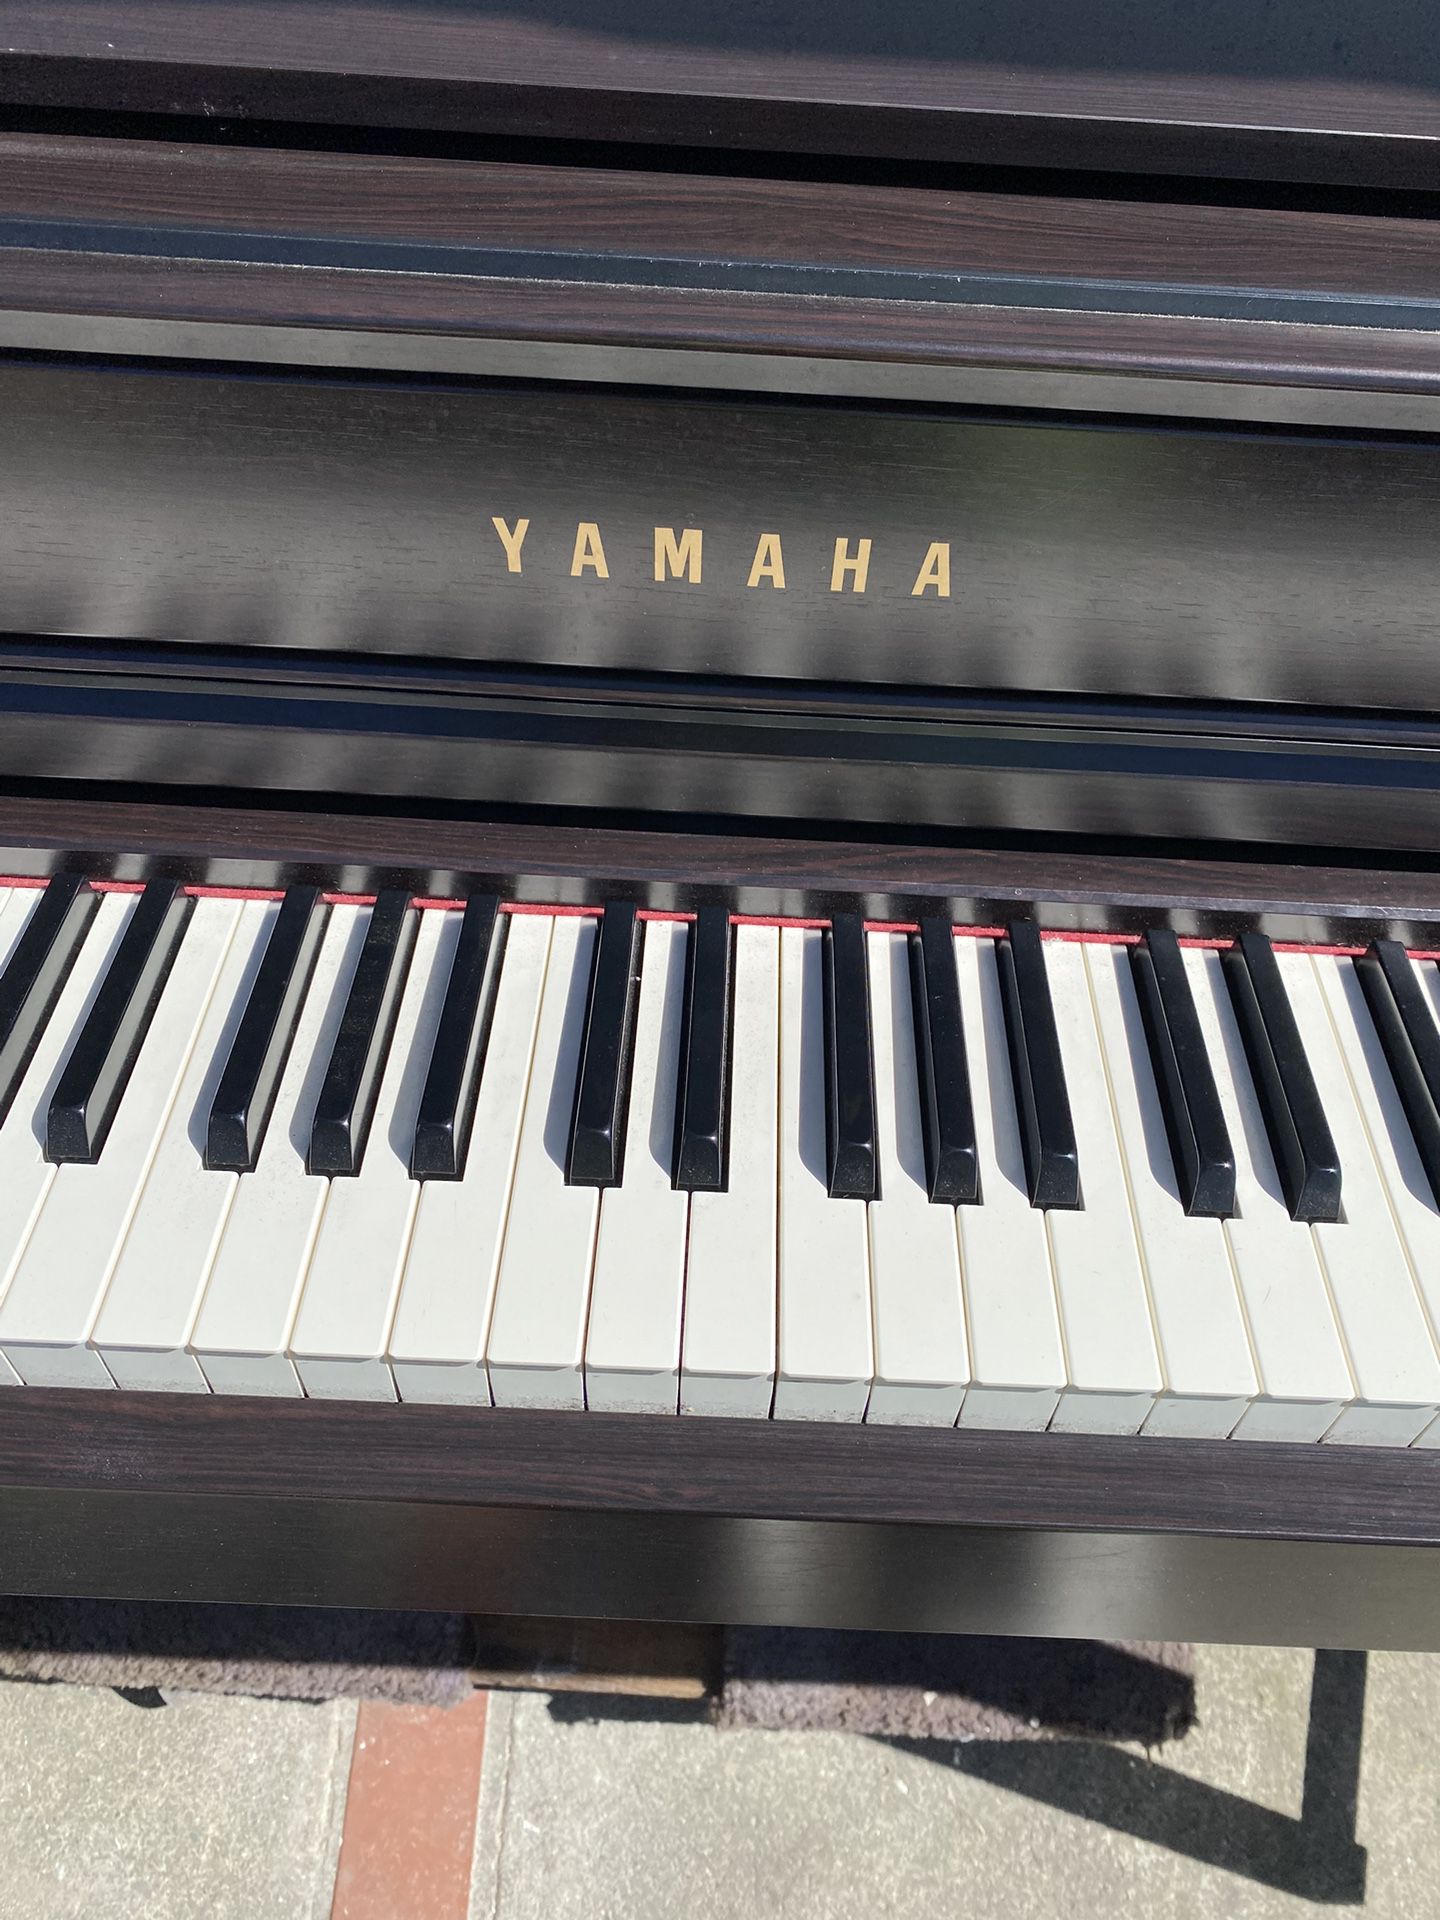 Yamaha Calvino a Digital Piano